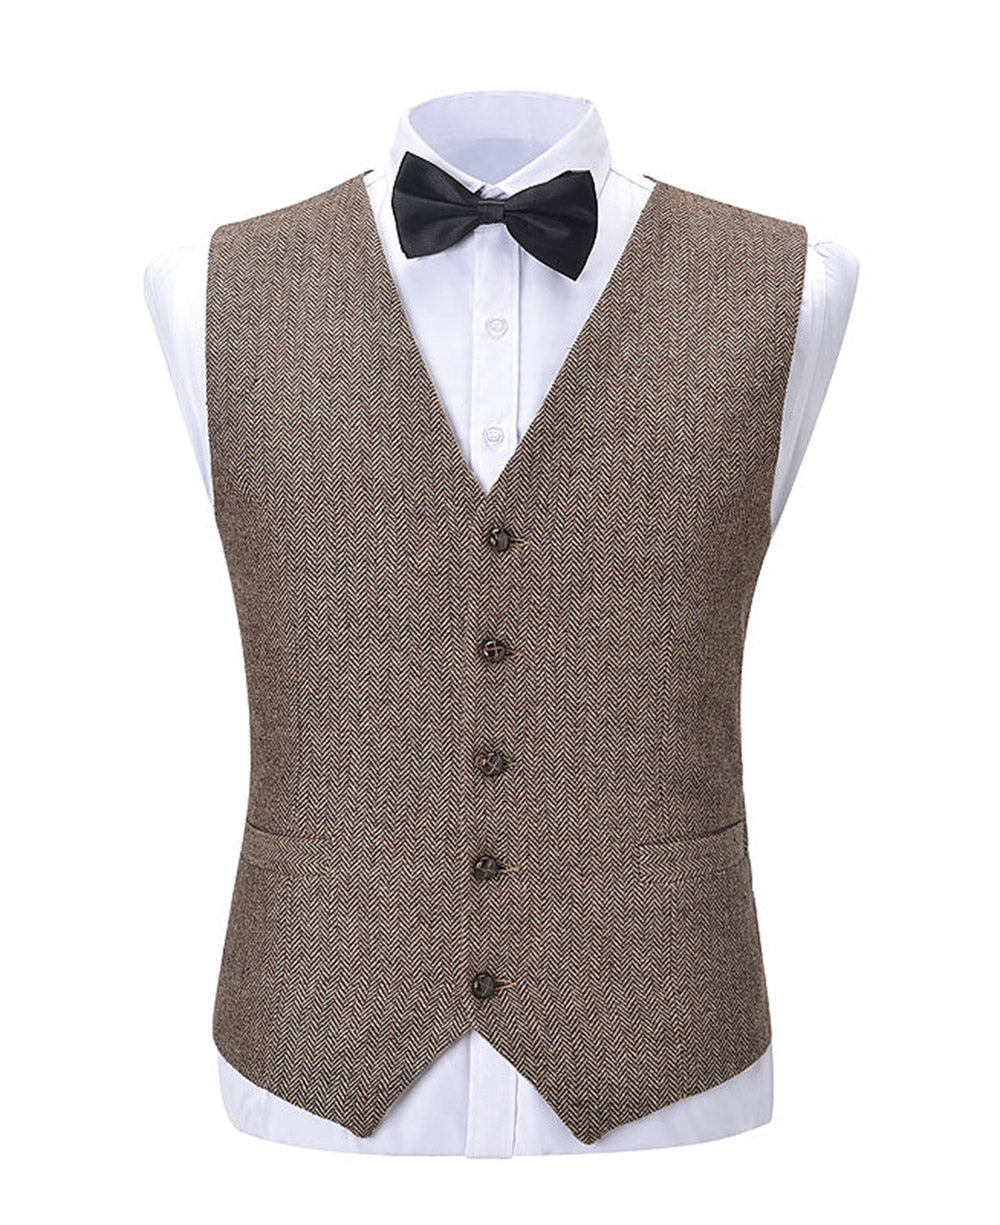 aesido Formal Men's Suit Vest Slim Fit Herringbone V Neck Waistcoat